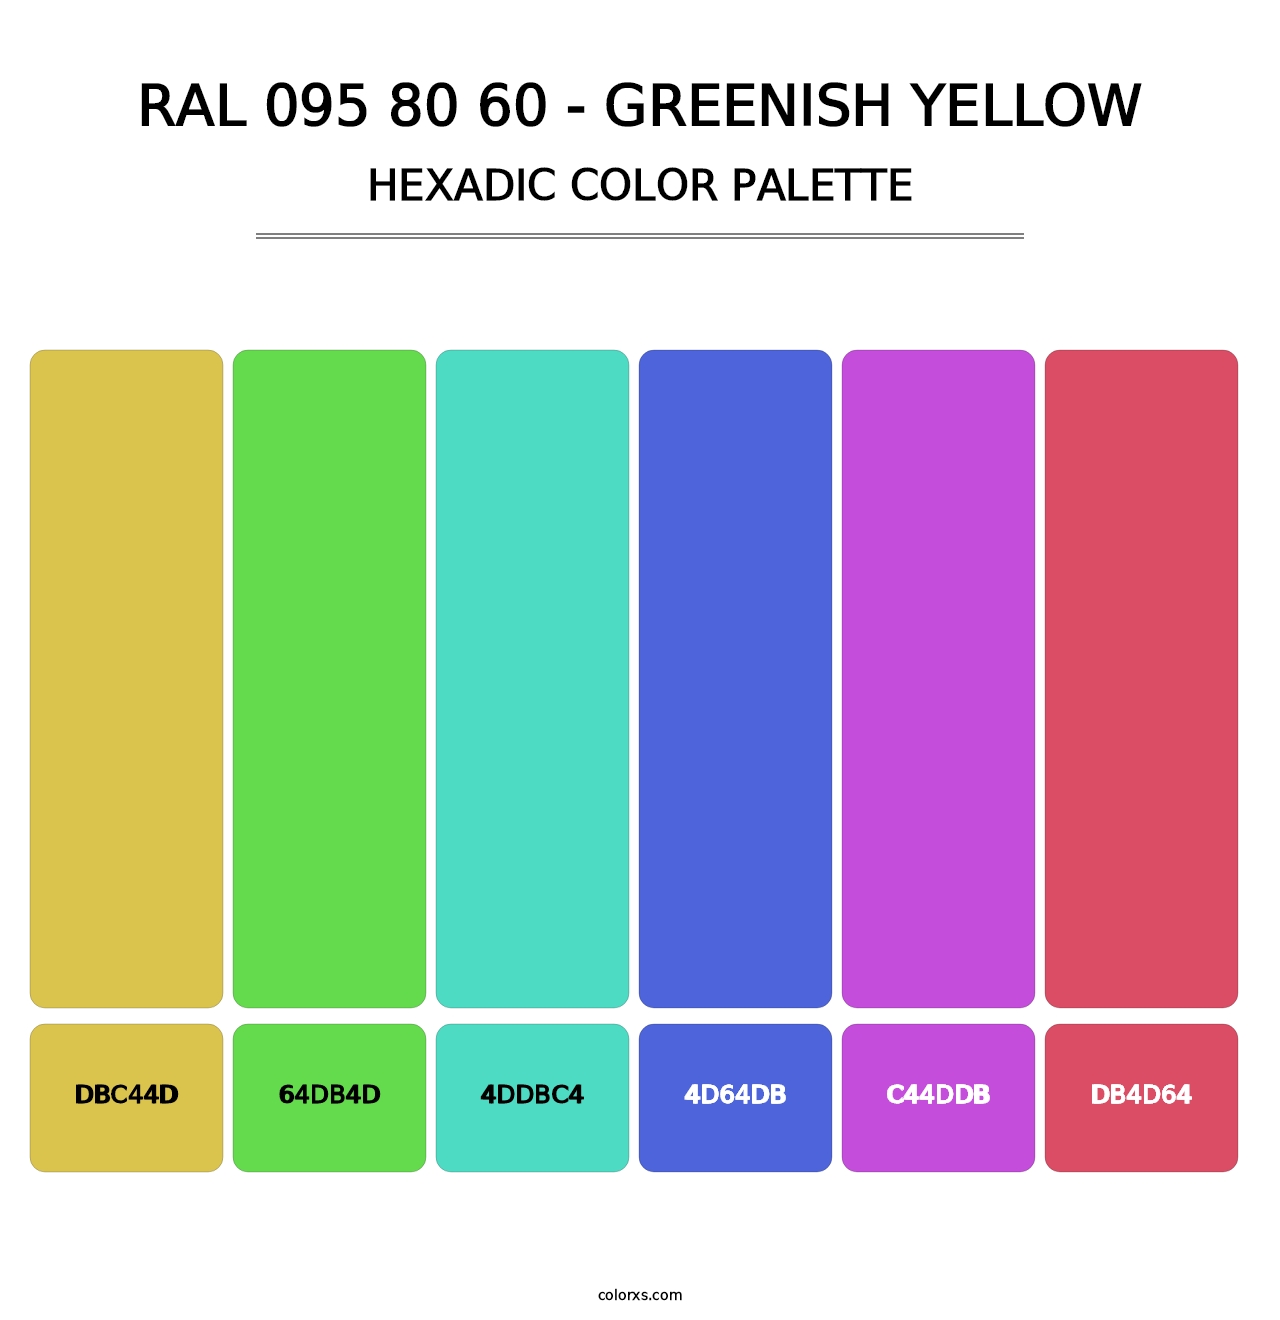 RAL 095 80 60 - Greenish Yellow - Hexadic Color Palette